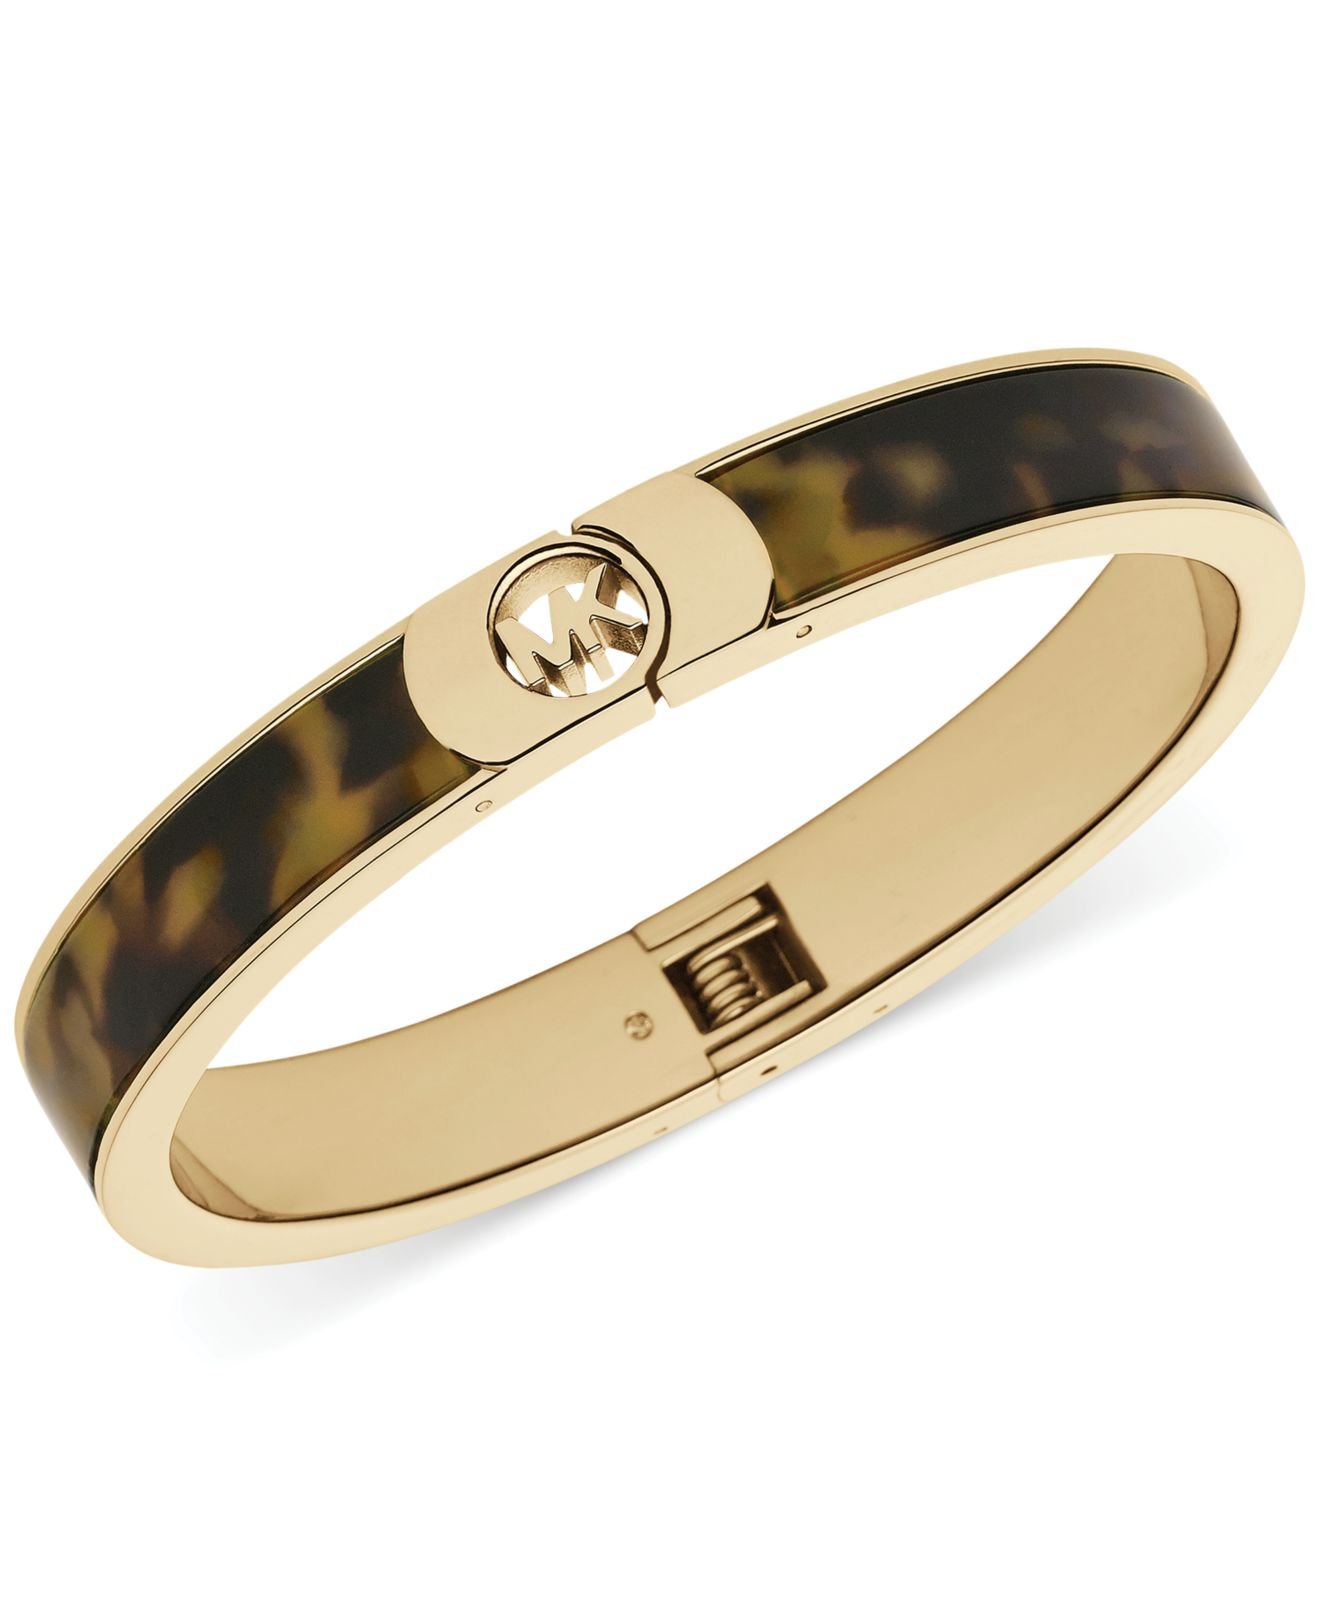 Lyst - Michael Kors Gold-Tone Tortoise Logo Bangle Bracelet in Metallic